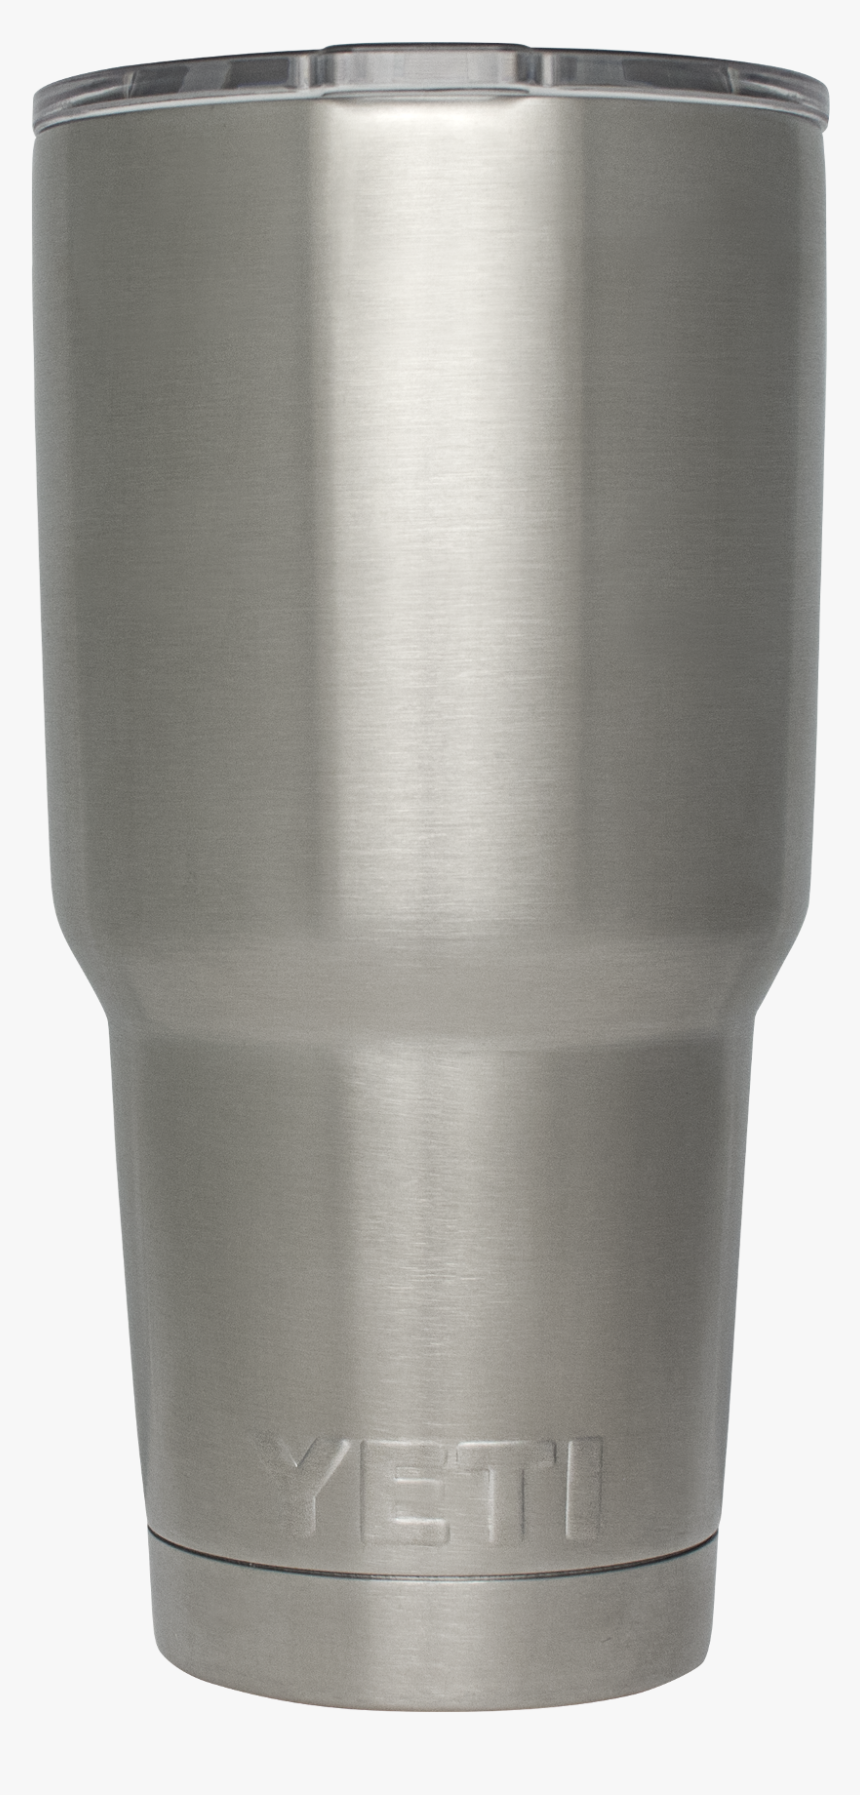 Yeti Cup Png - Yeti 30 Oz Tumbler, Transparent Png, Free Download